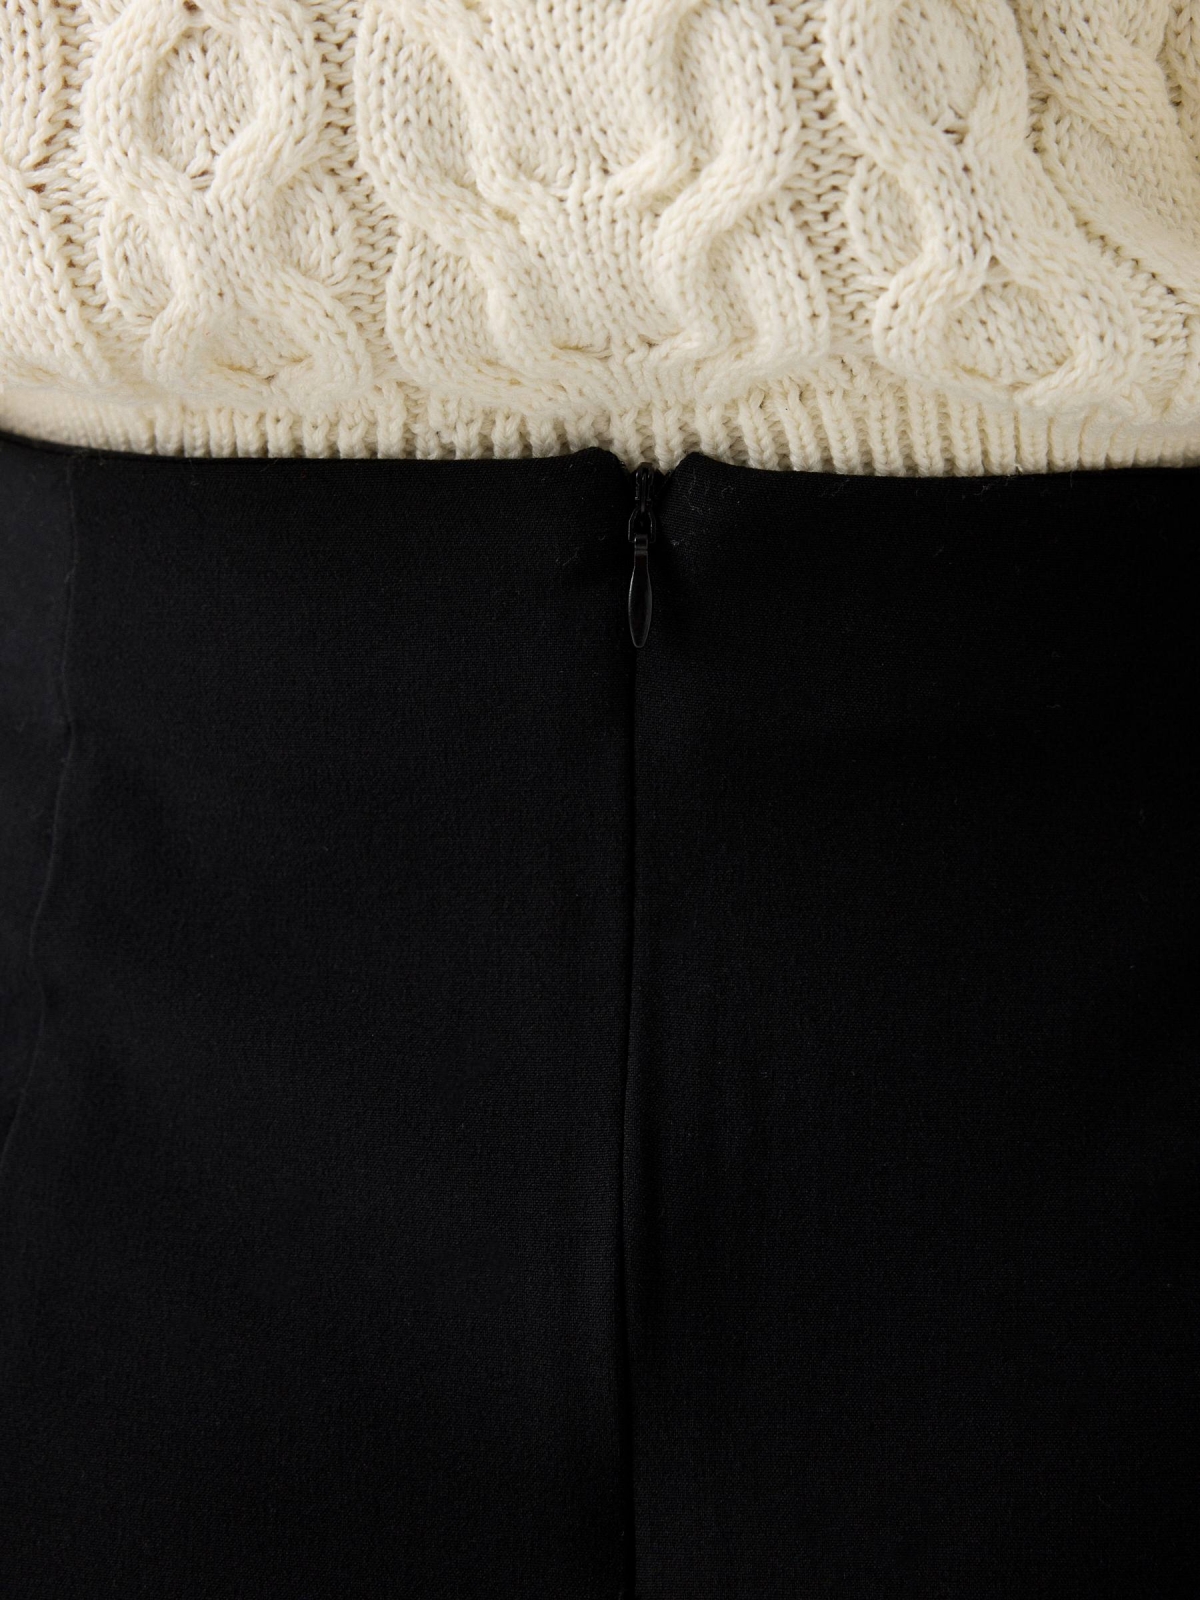 Falda cruzada tailoring negro vista detalle